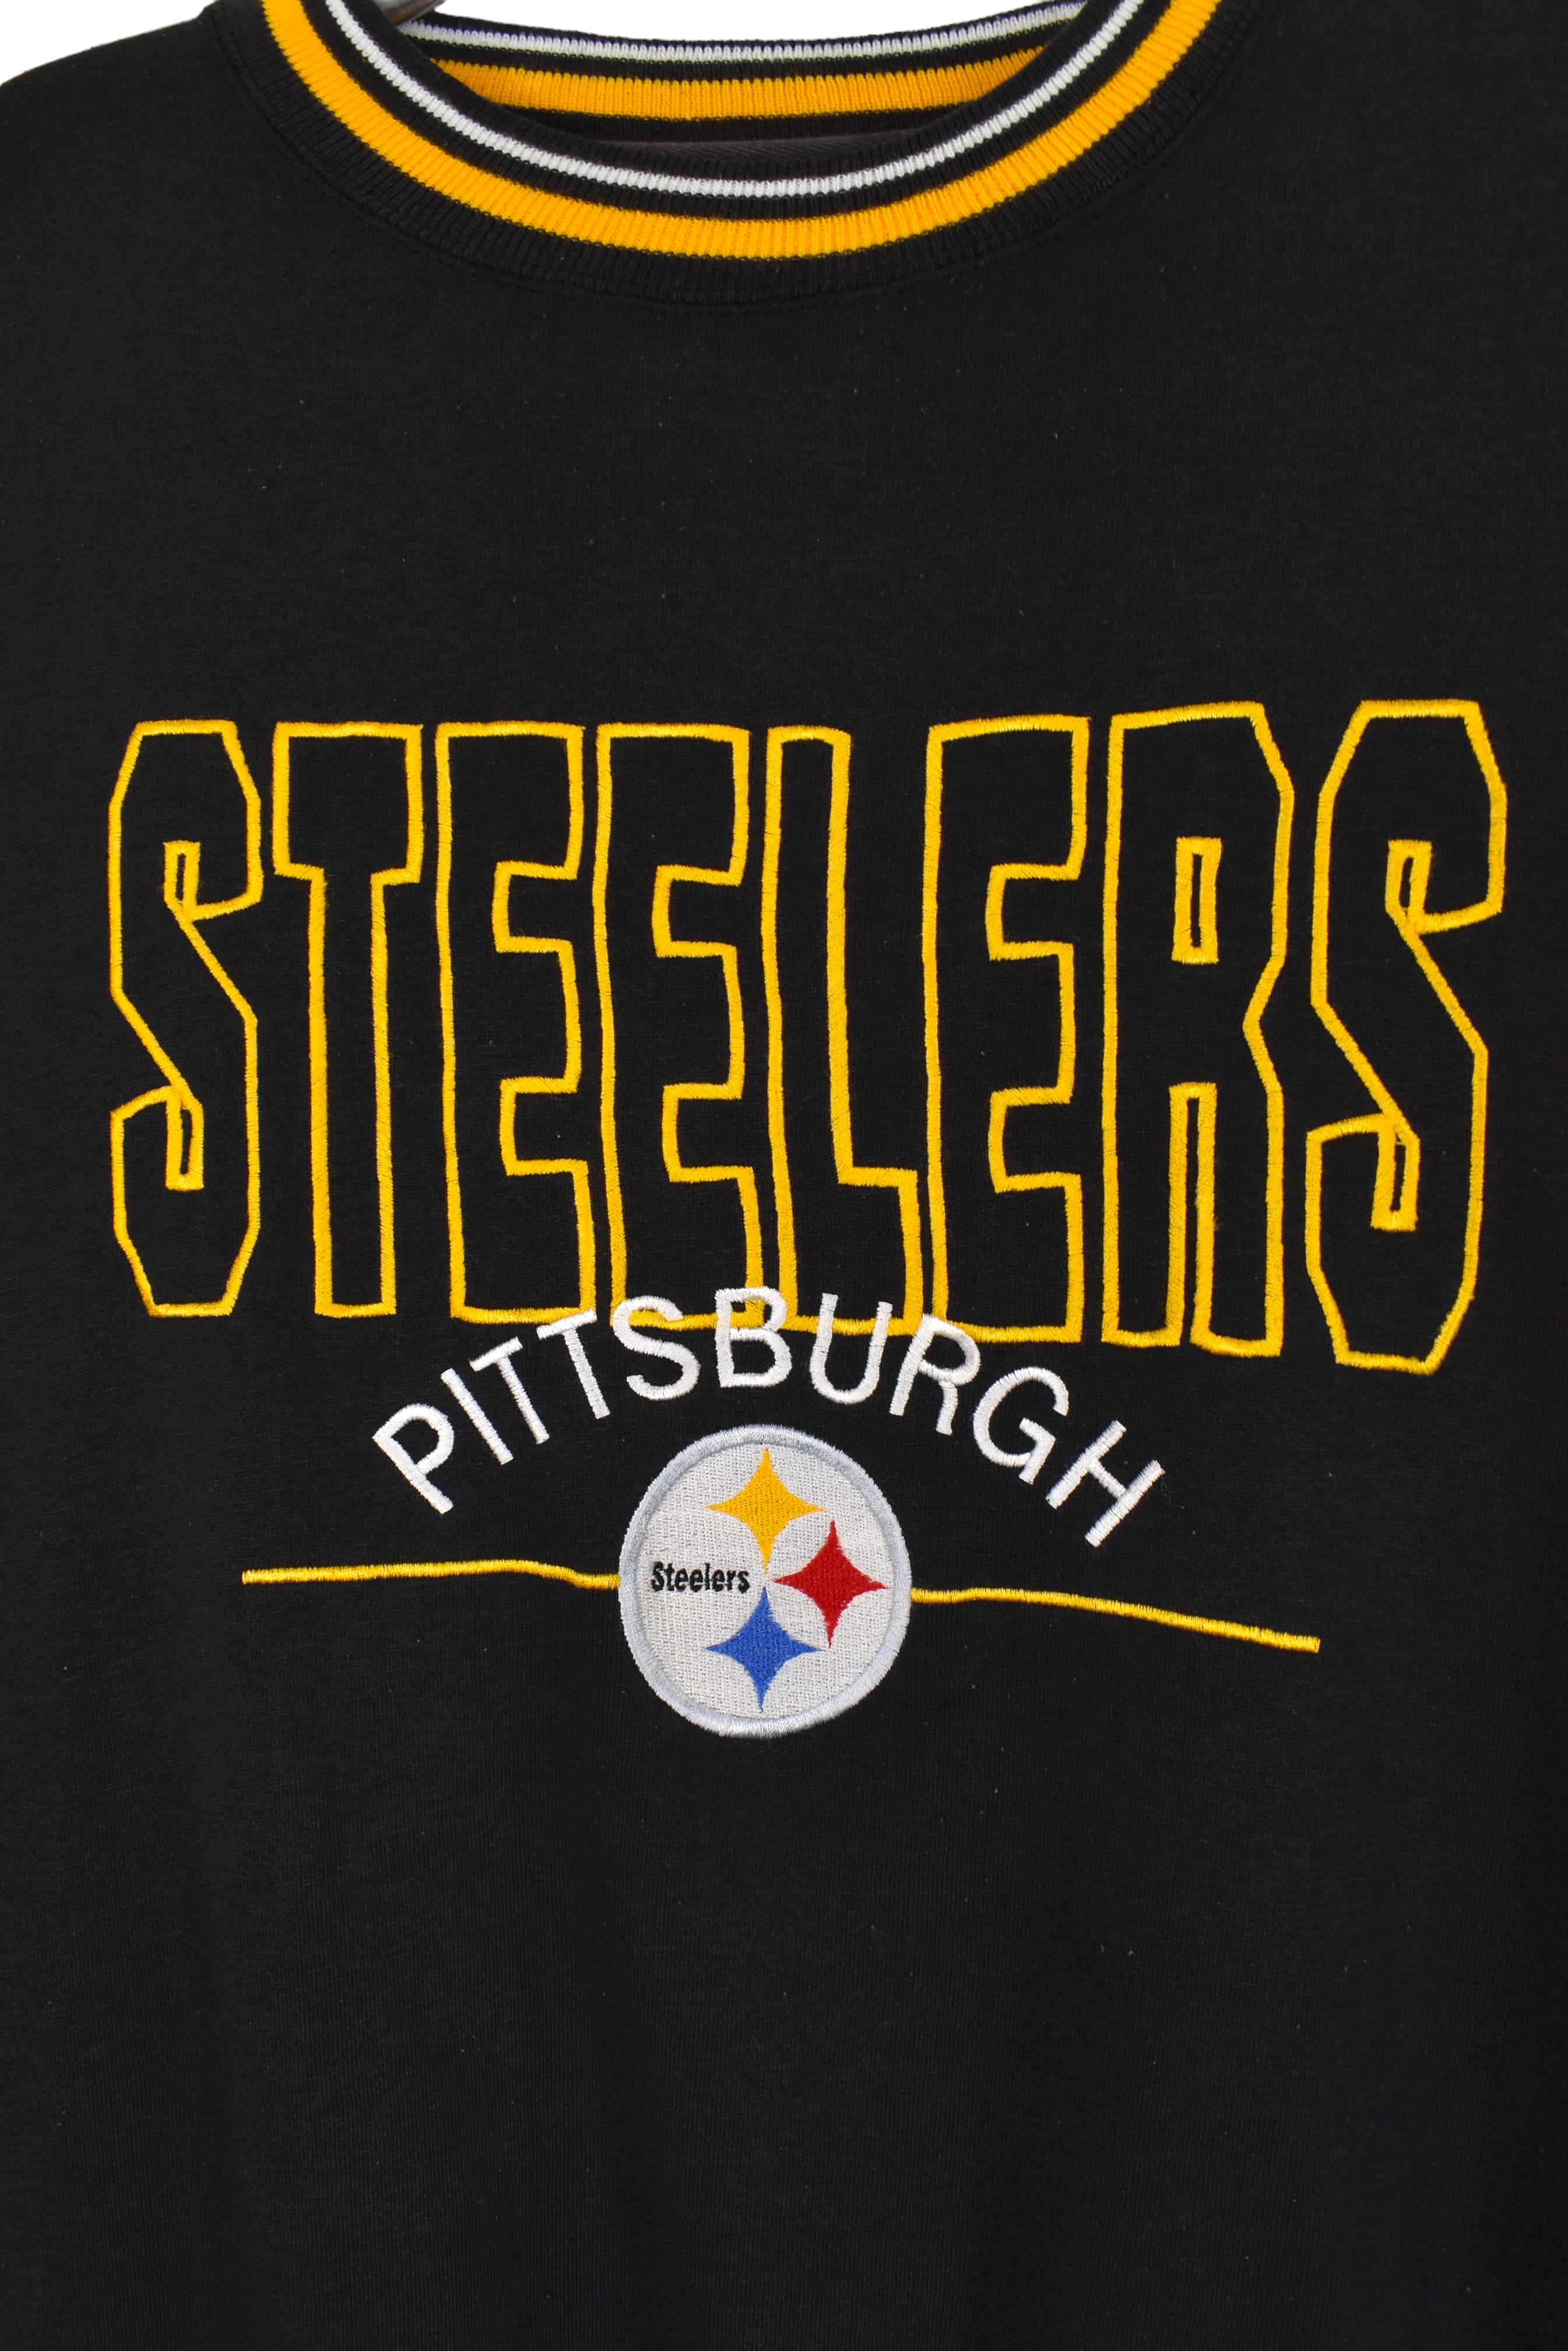 Vintage Pittsburgh Steelers sweatshirt, NFL black embroidered crewneck - XL